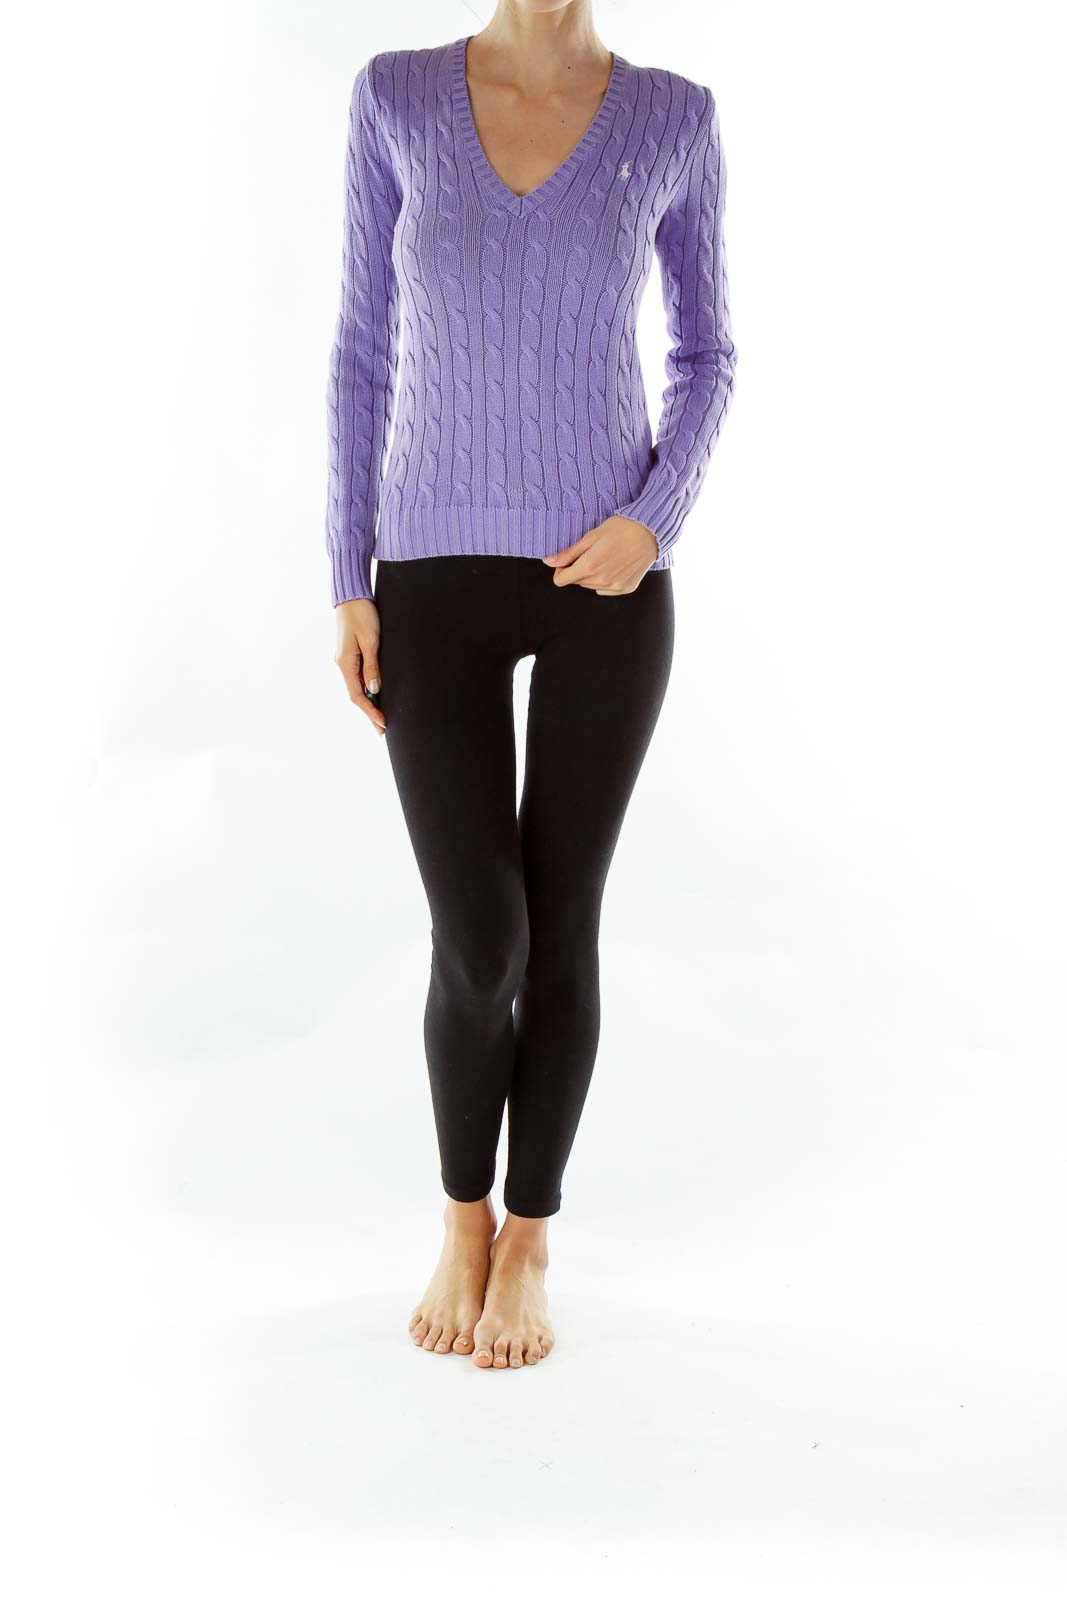 Ralph Lauren Sport - Purple Cable-Knit V-Neck Sweater Cotton | SilkRoll